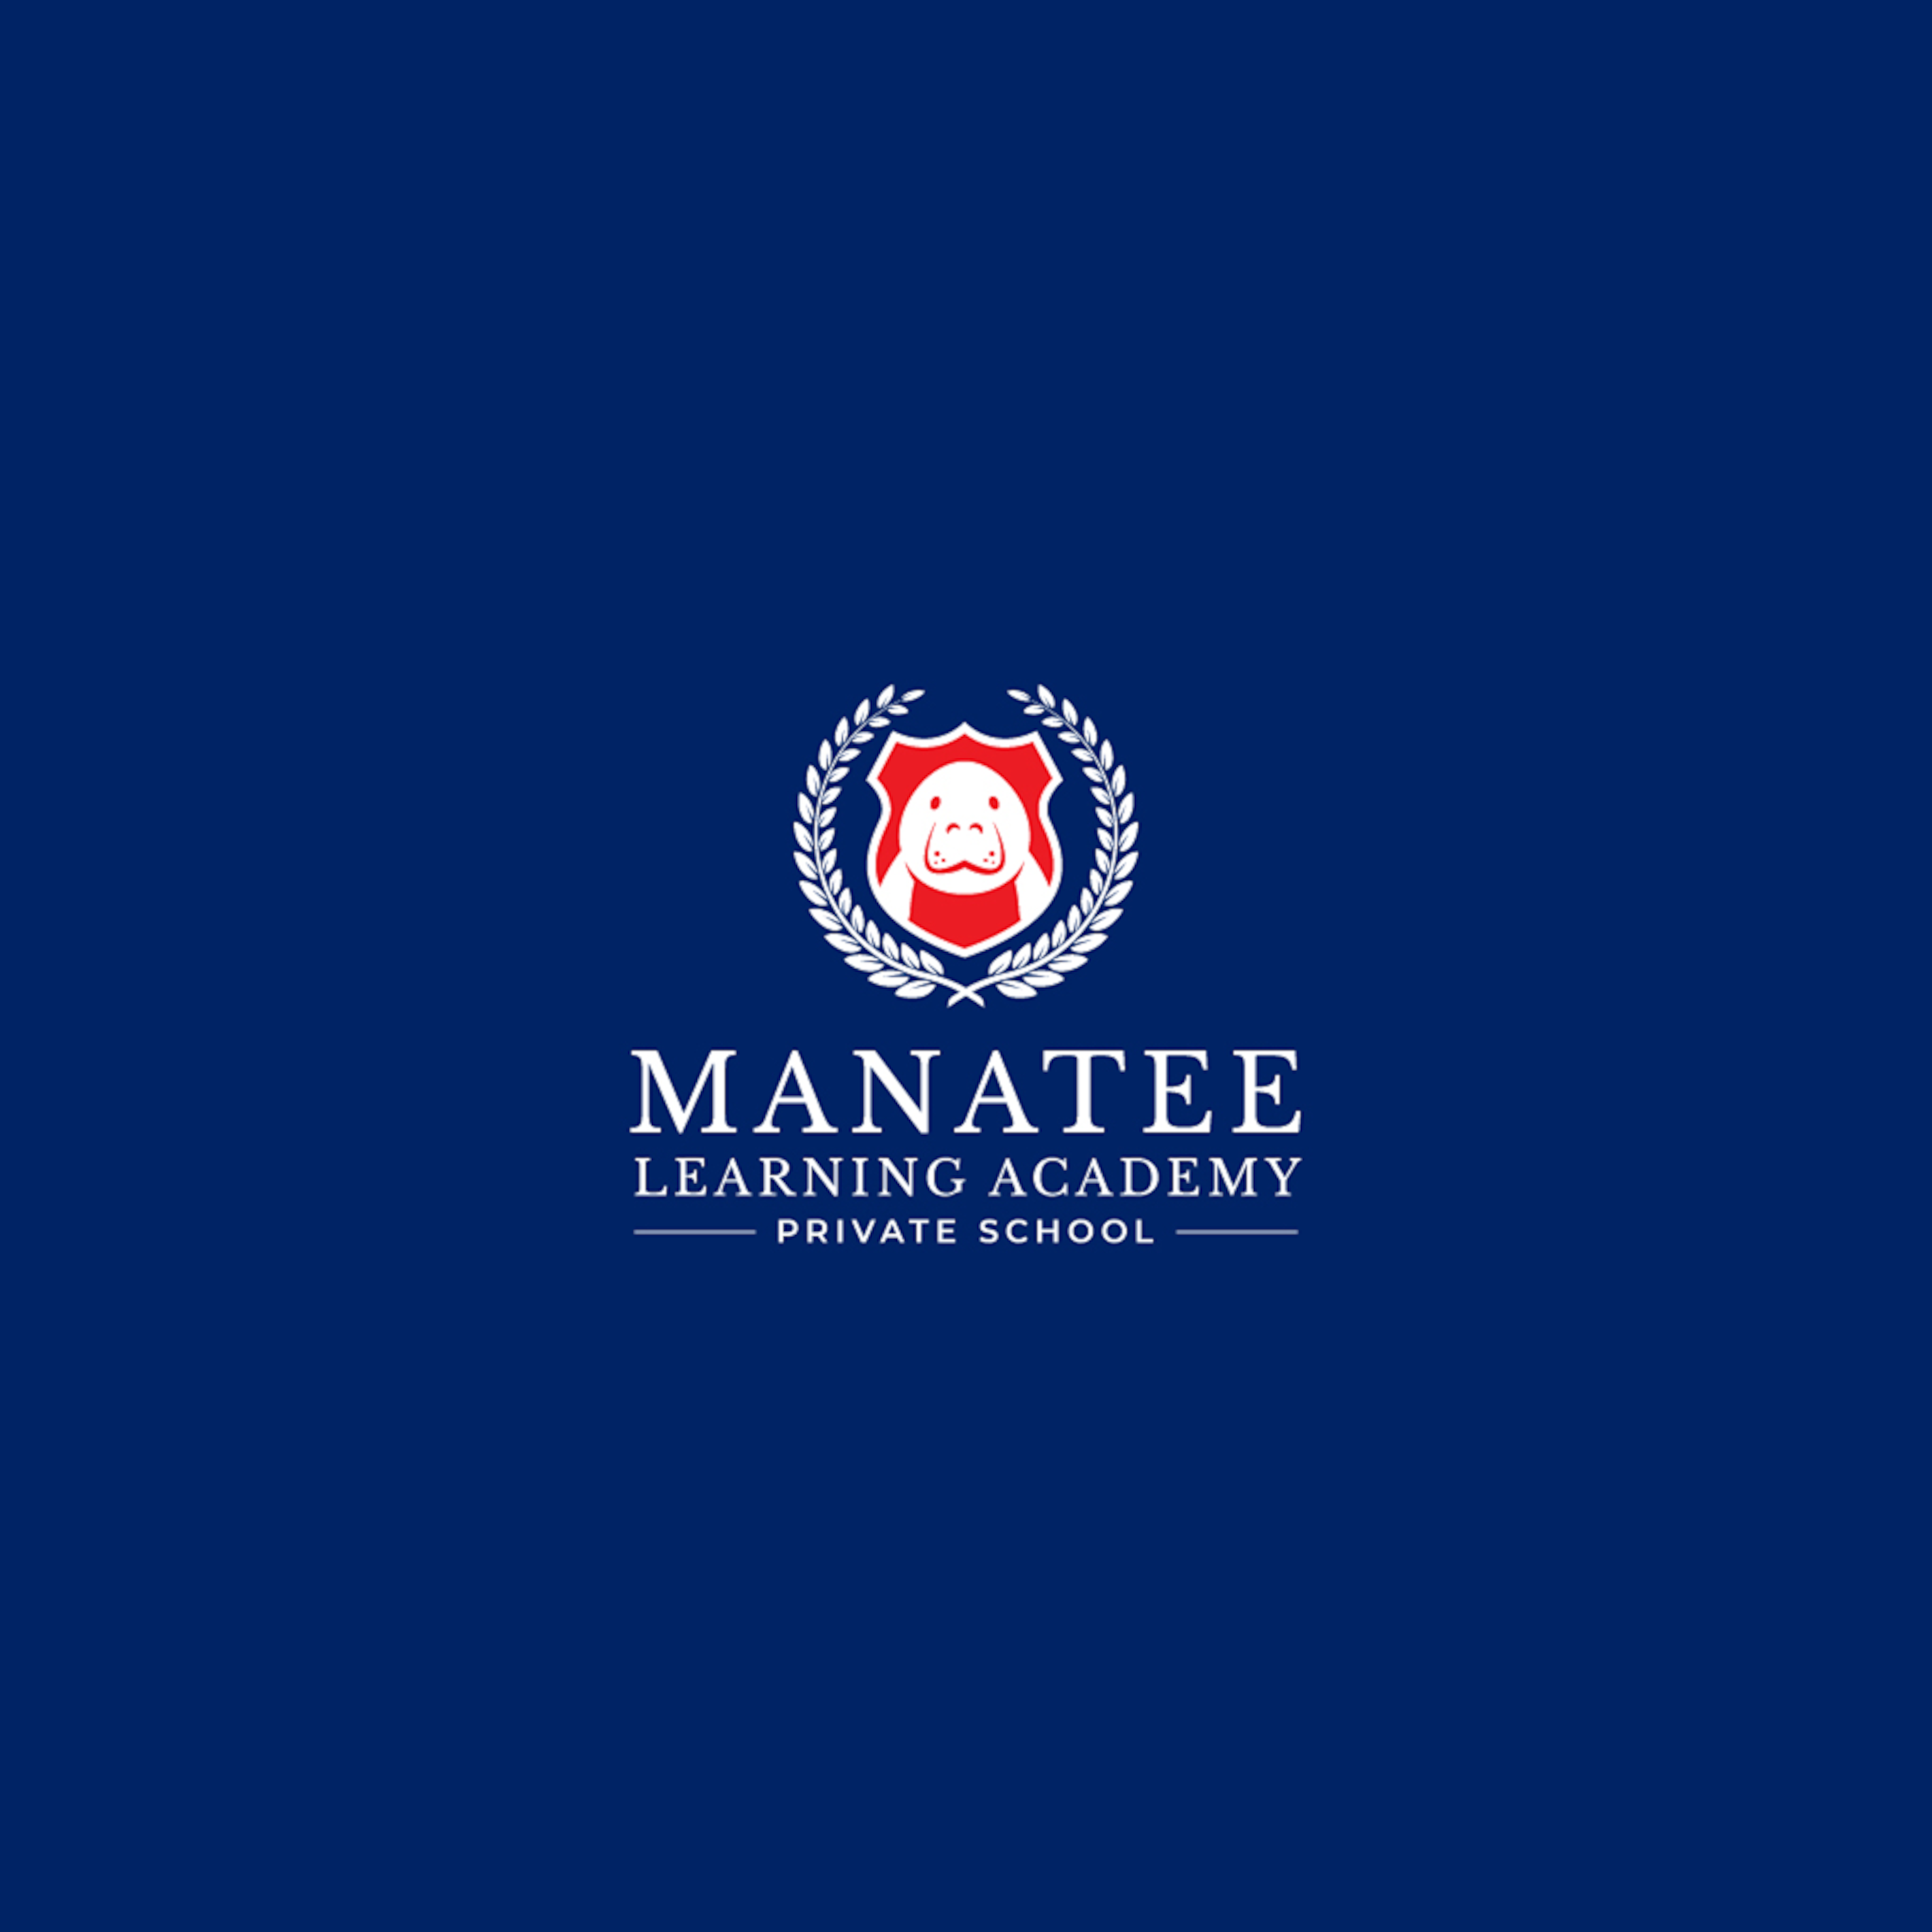 Manatee Learning Academy 2020